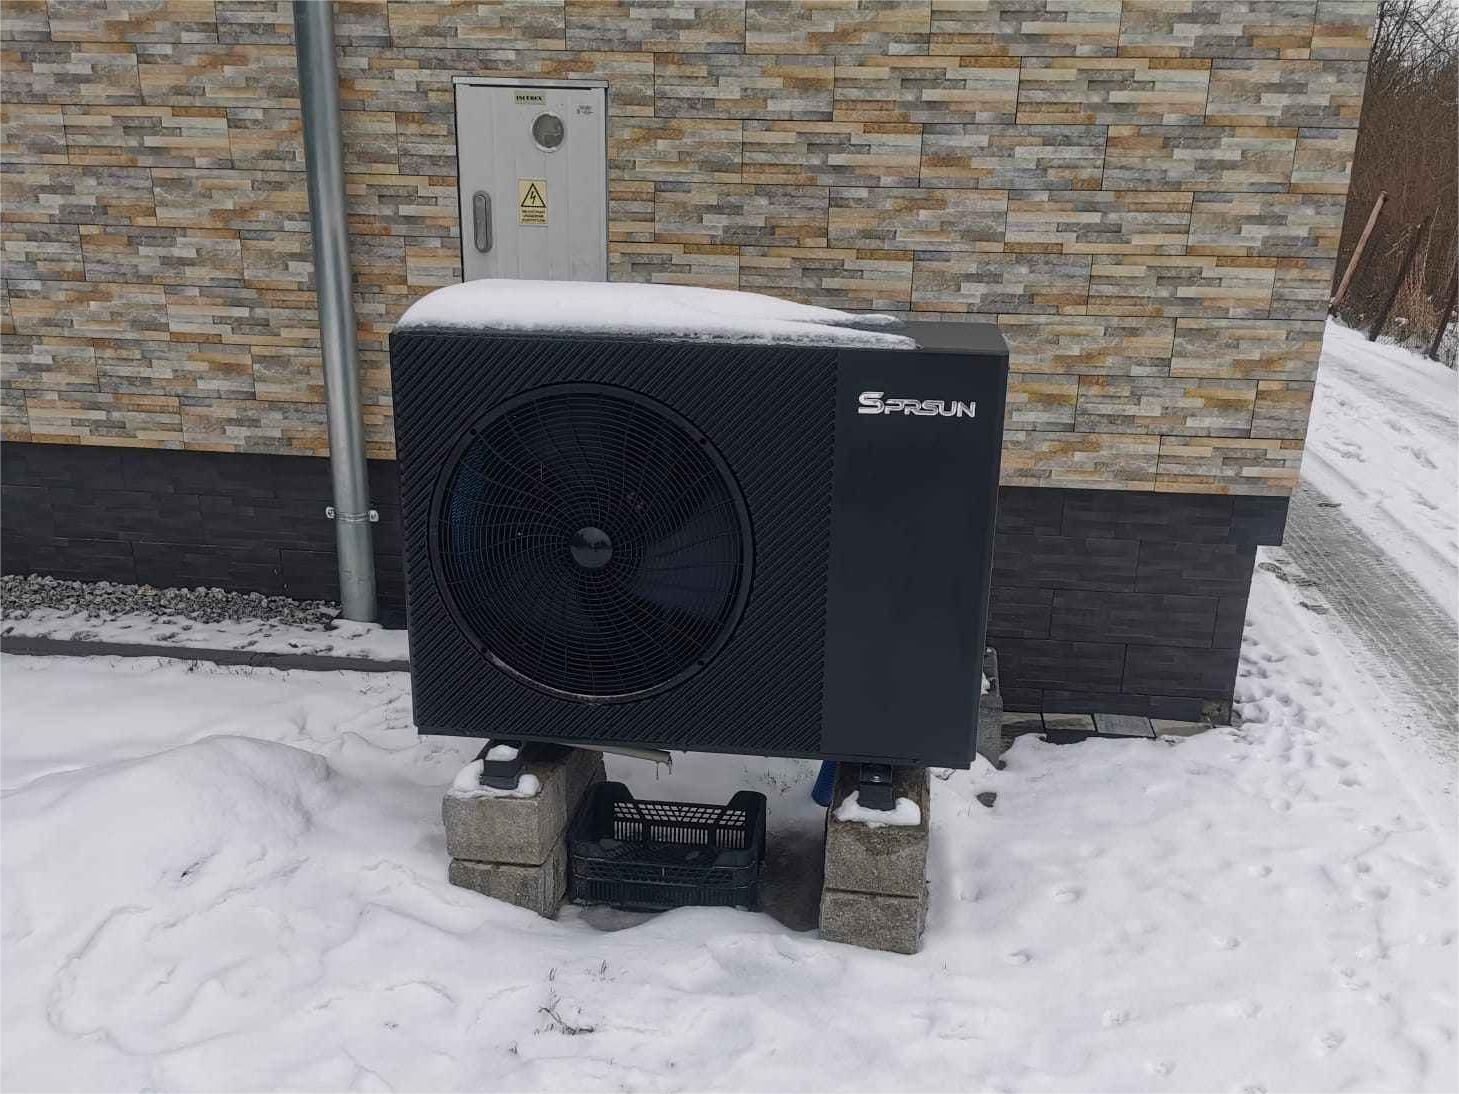 SPRSUN heat pump in Romania